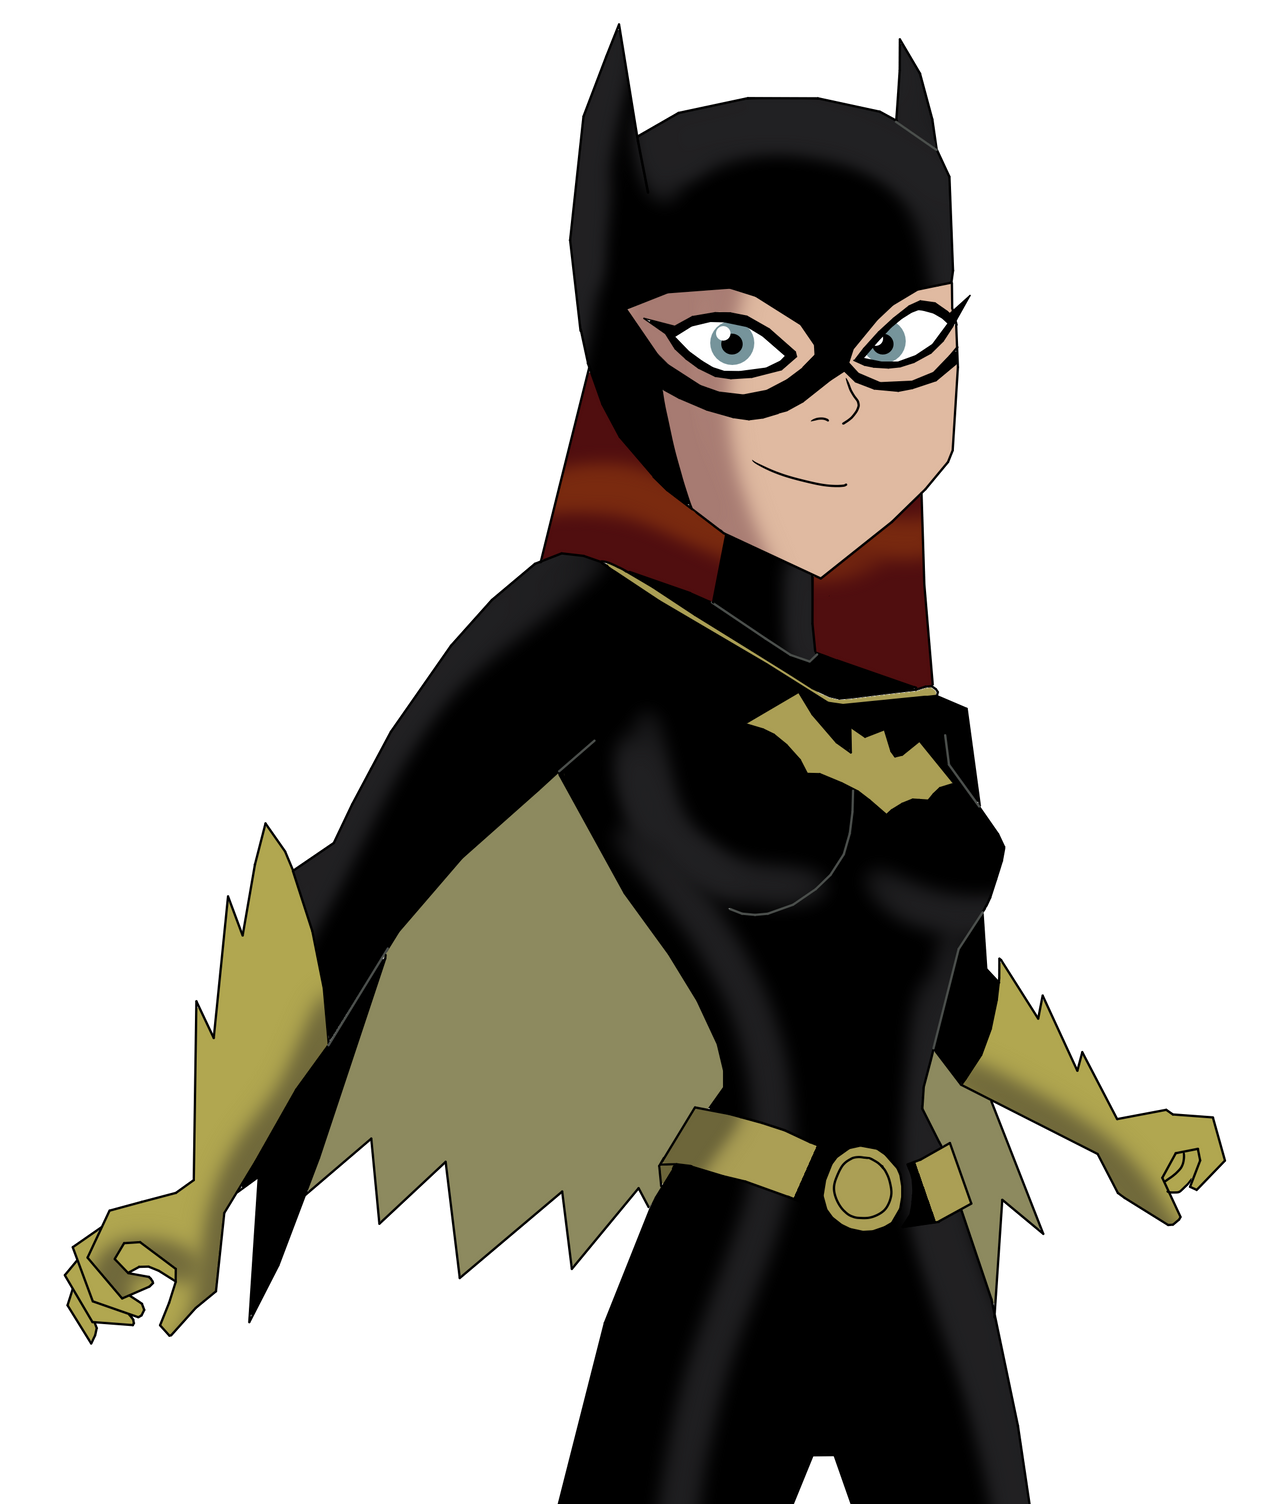 Batgirl in Teen Titans Style by CaptainEdwardTeague on DeviantArt